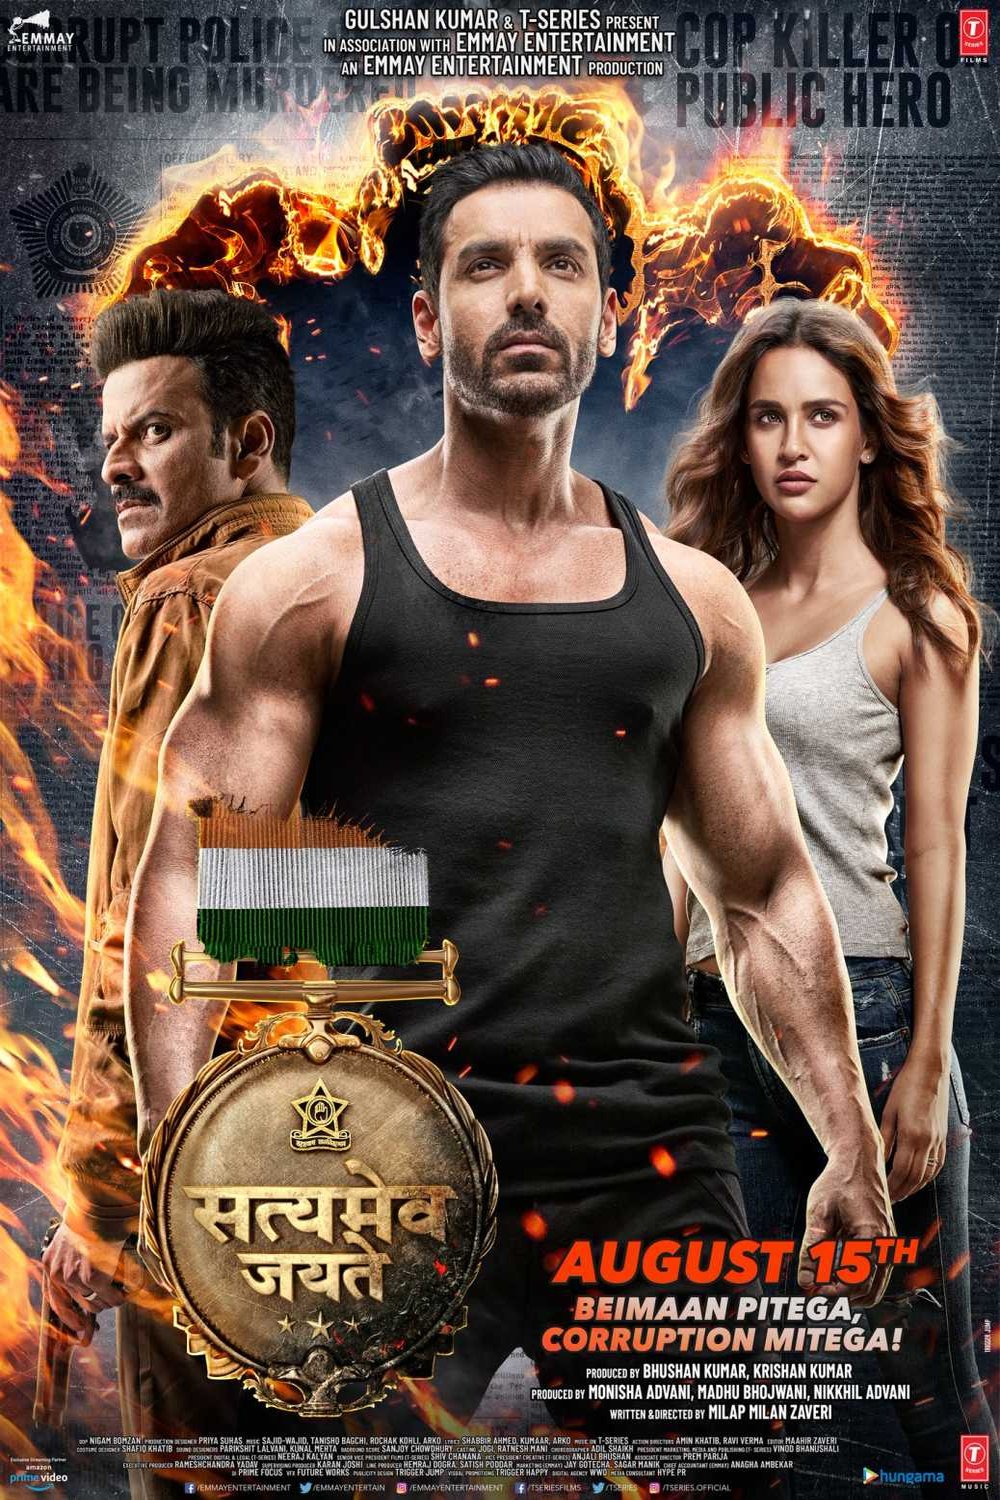 Hindi poster of the movie Satyameva Jayate